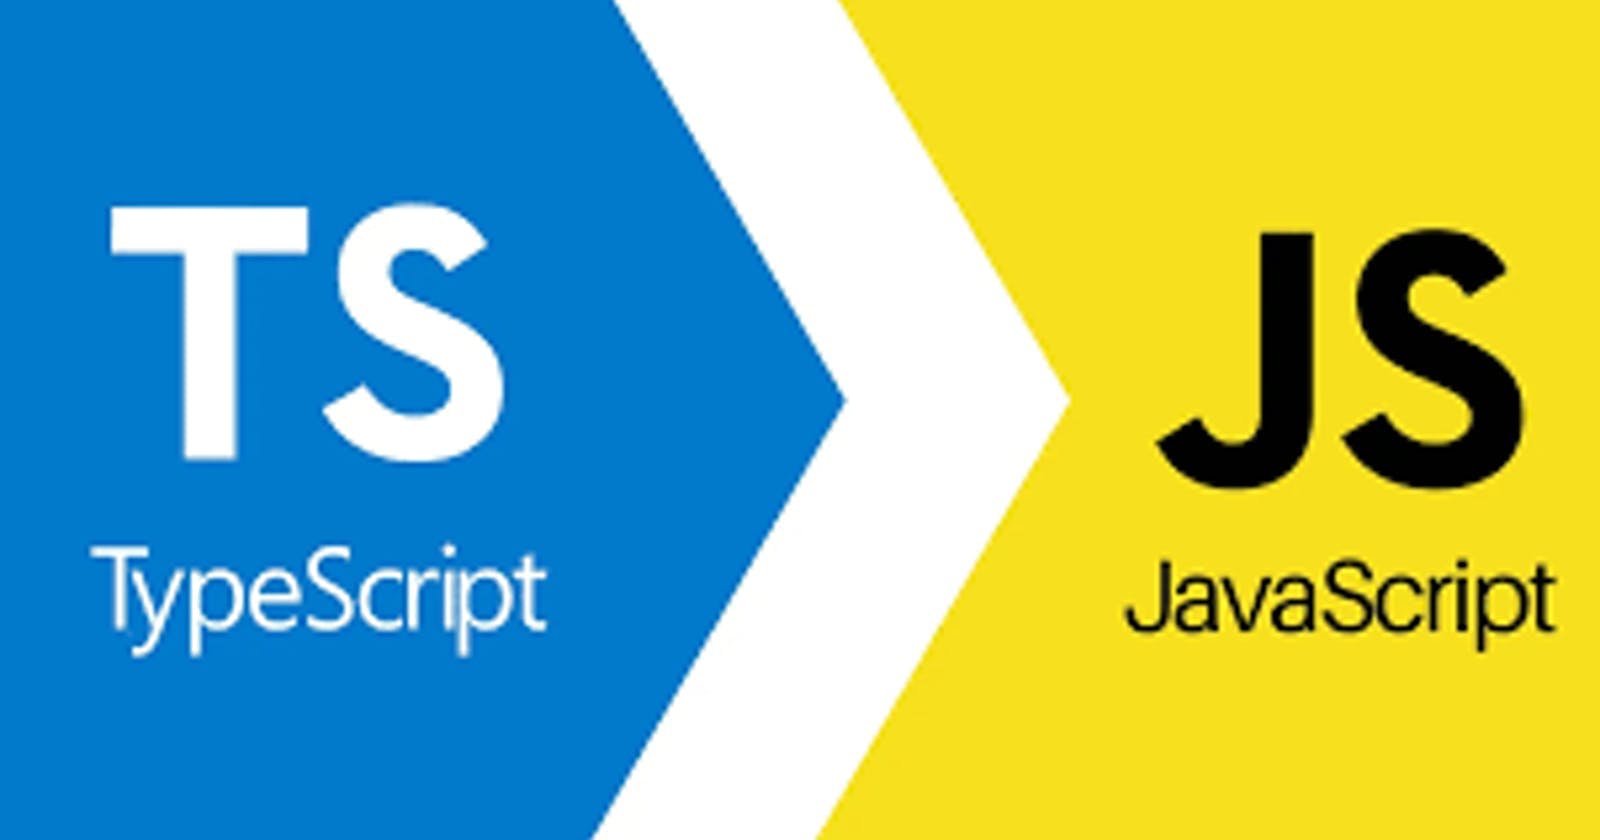 Intro to Typescript for Javascript devs